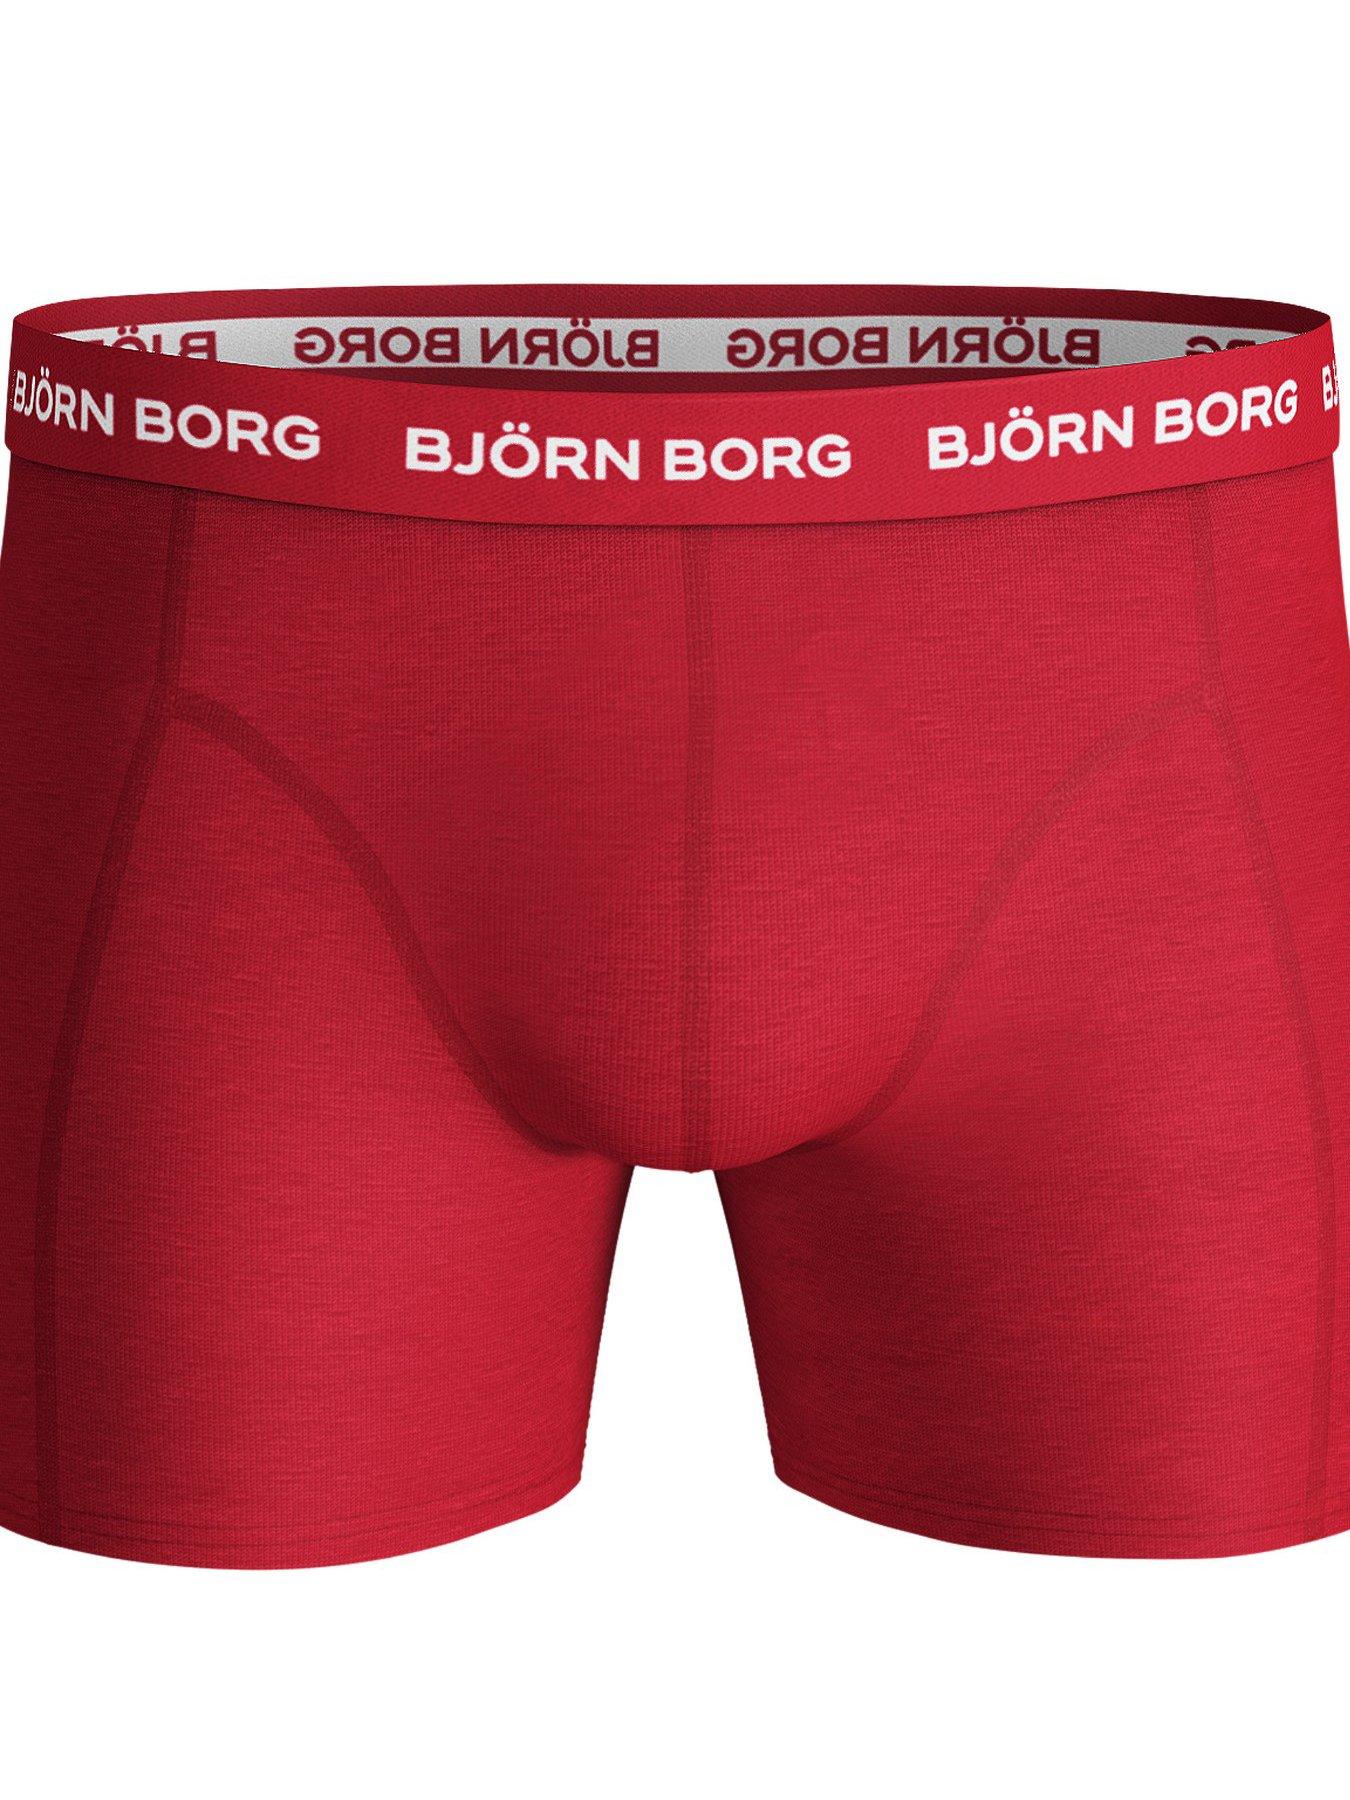 Mens Bjorn Borg Cotton Stretch Boxer 5 Pack